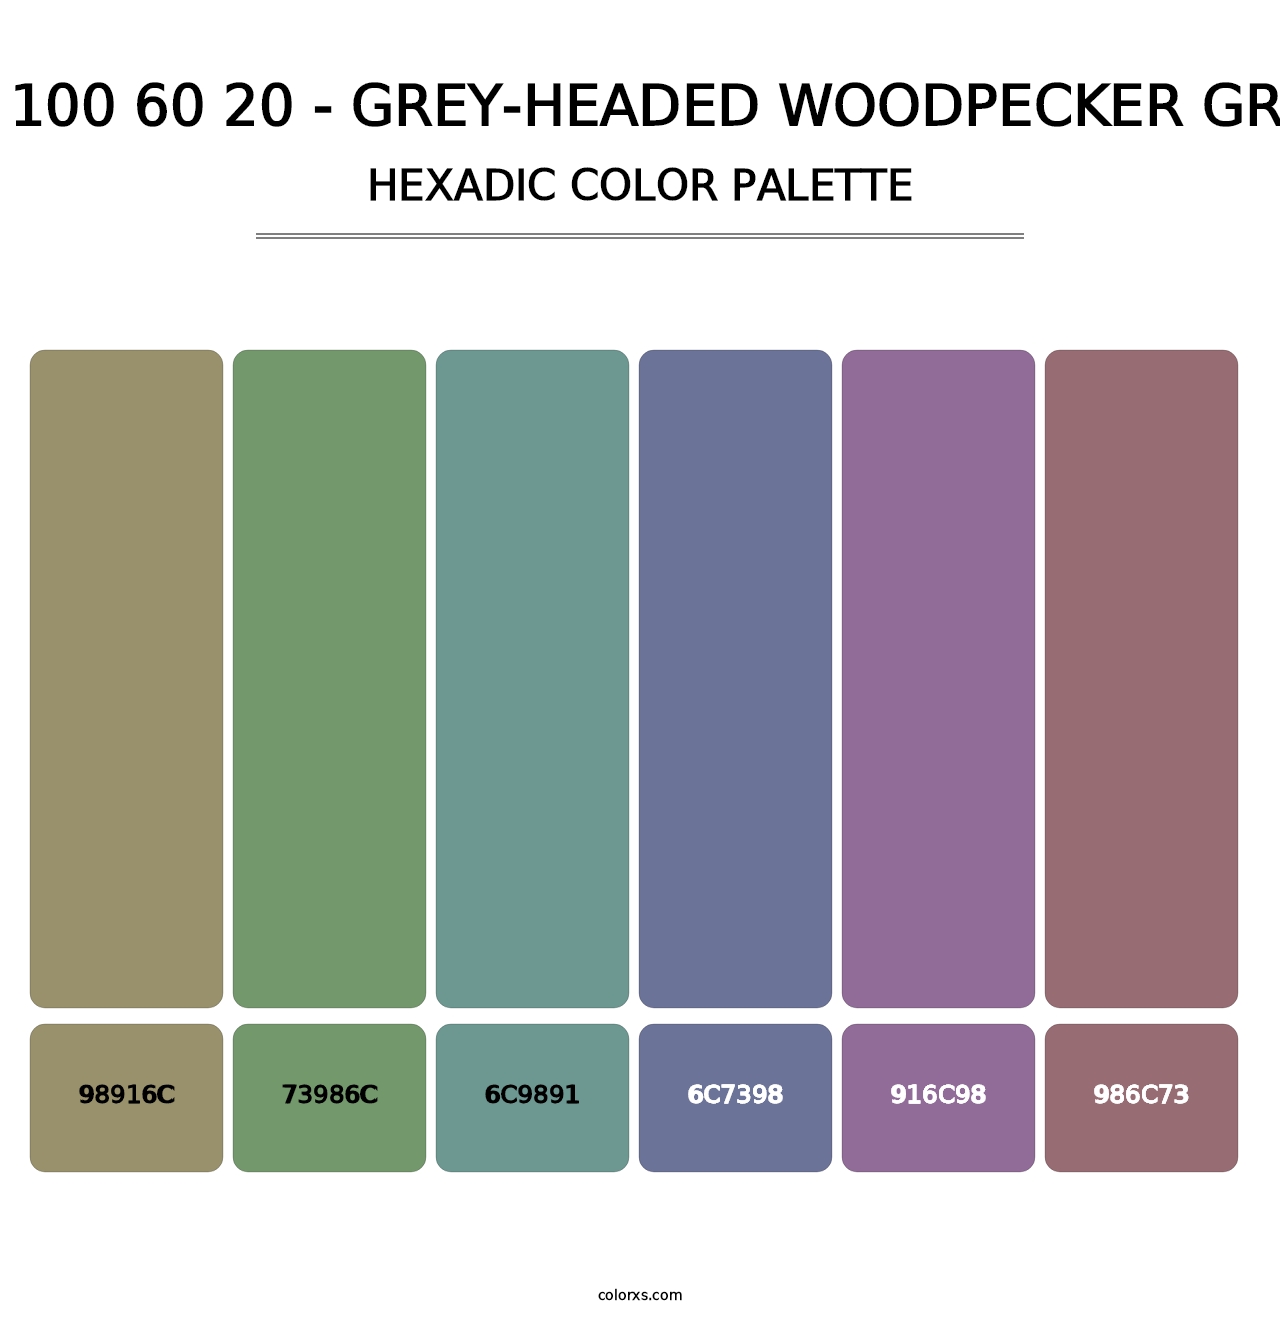 RAL 100 60 20 - Grey-Headed Woodpecker Green - Hexadic Color Palette